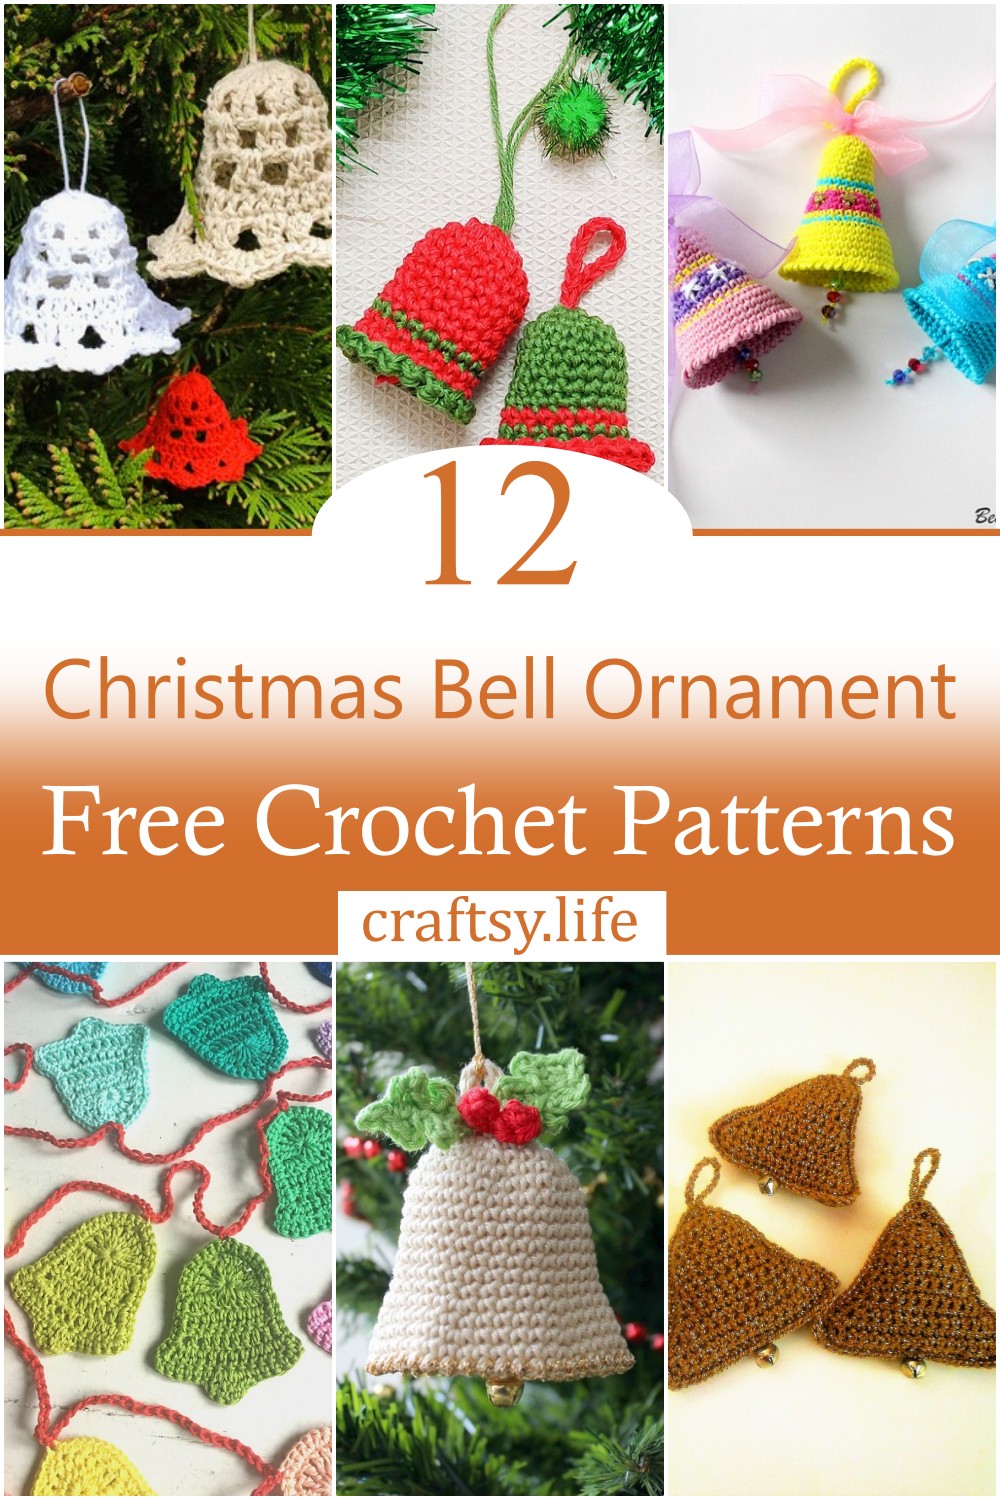 Free Crochet Christmas Bell Ornament Patterns 1